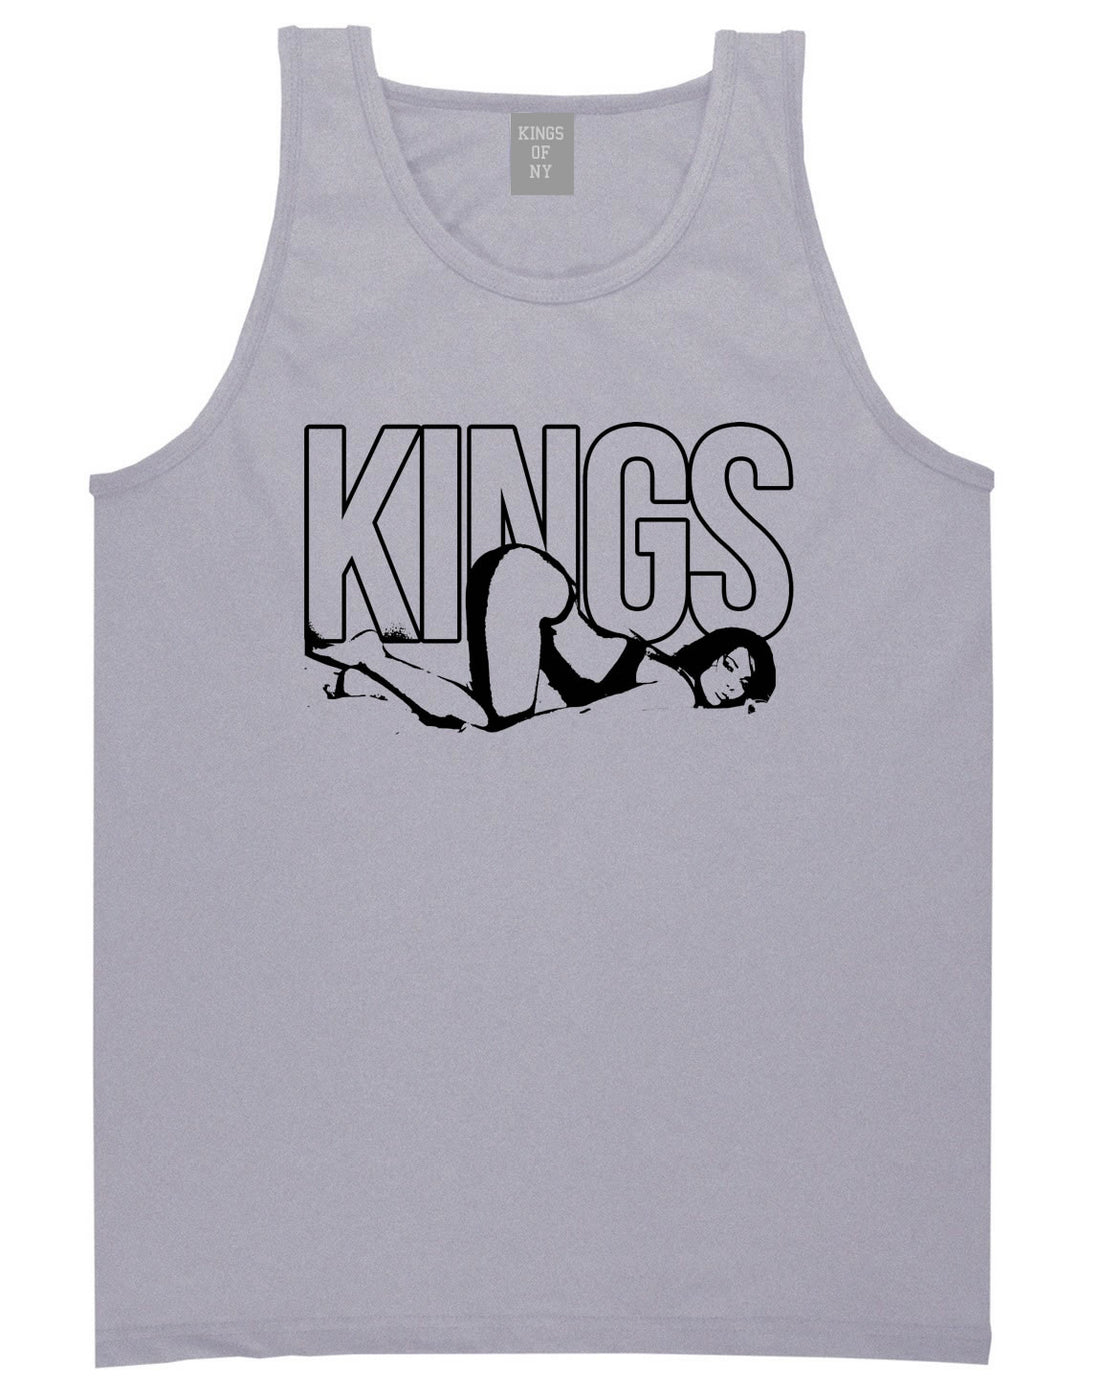 Kings Girl Streetwear Tank Top in Grey by Kings Of NY